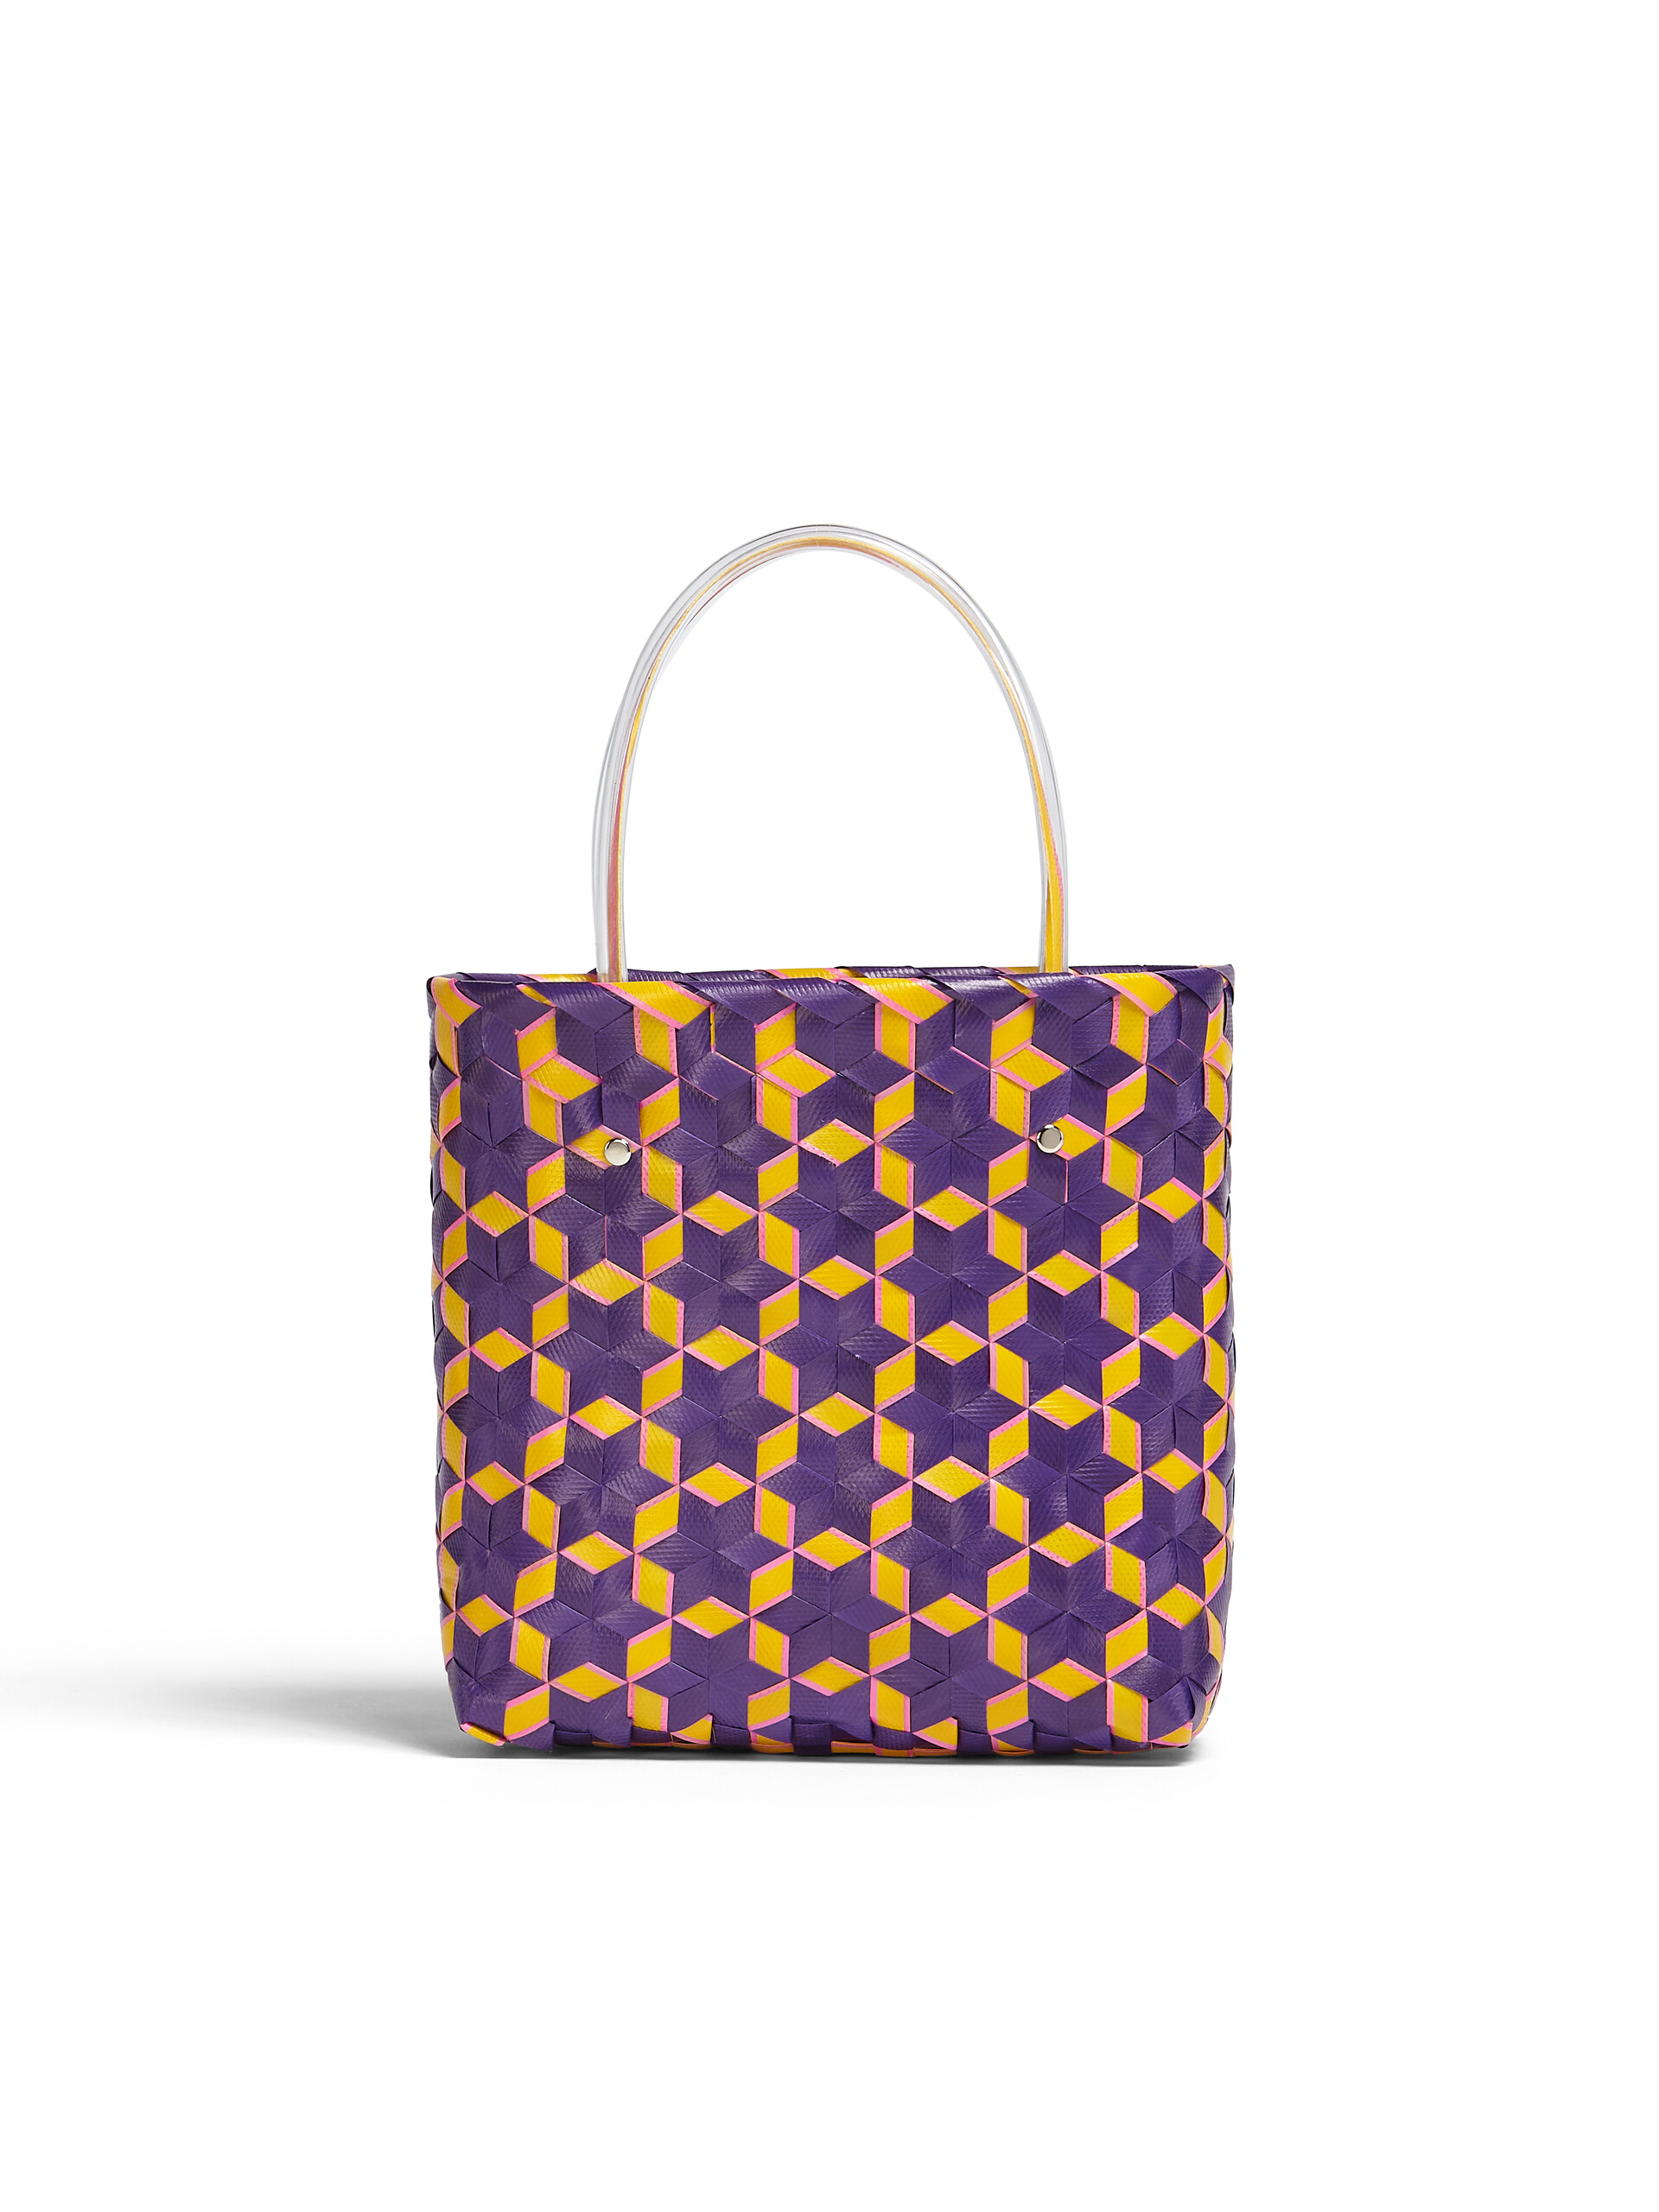 MARNI MARKET bag in purple star woven material - Bags - Image 3